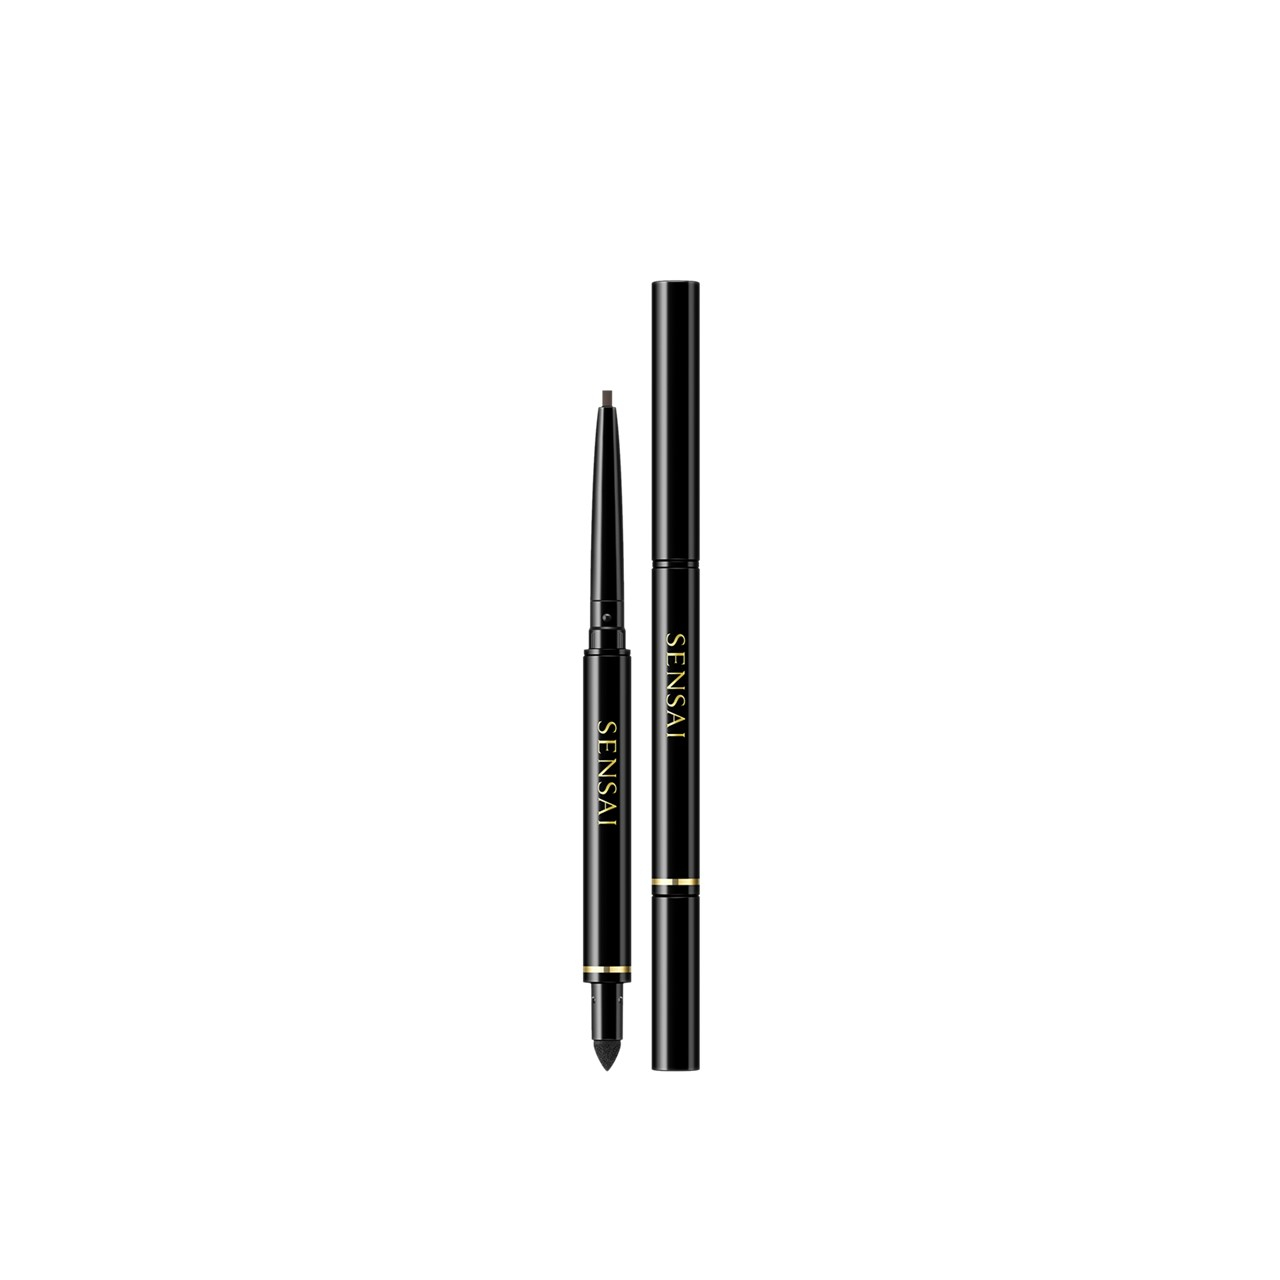 SENSAI Lasting Eyeliner Pencil 02 Deep Brown 0.1g